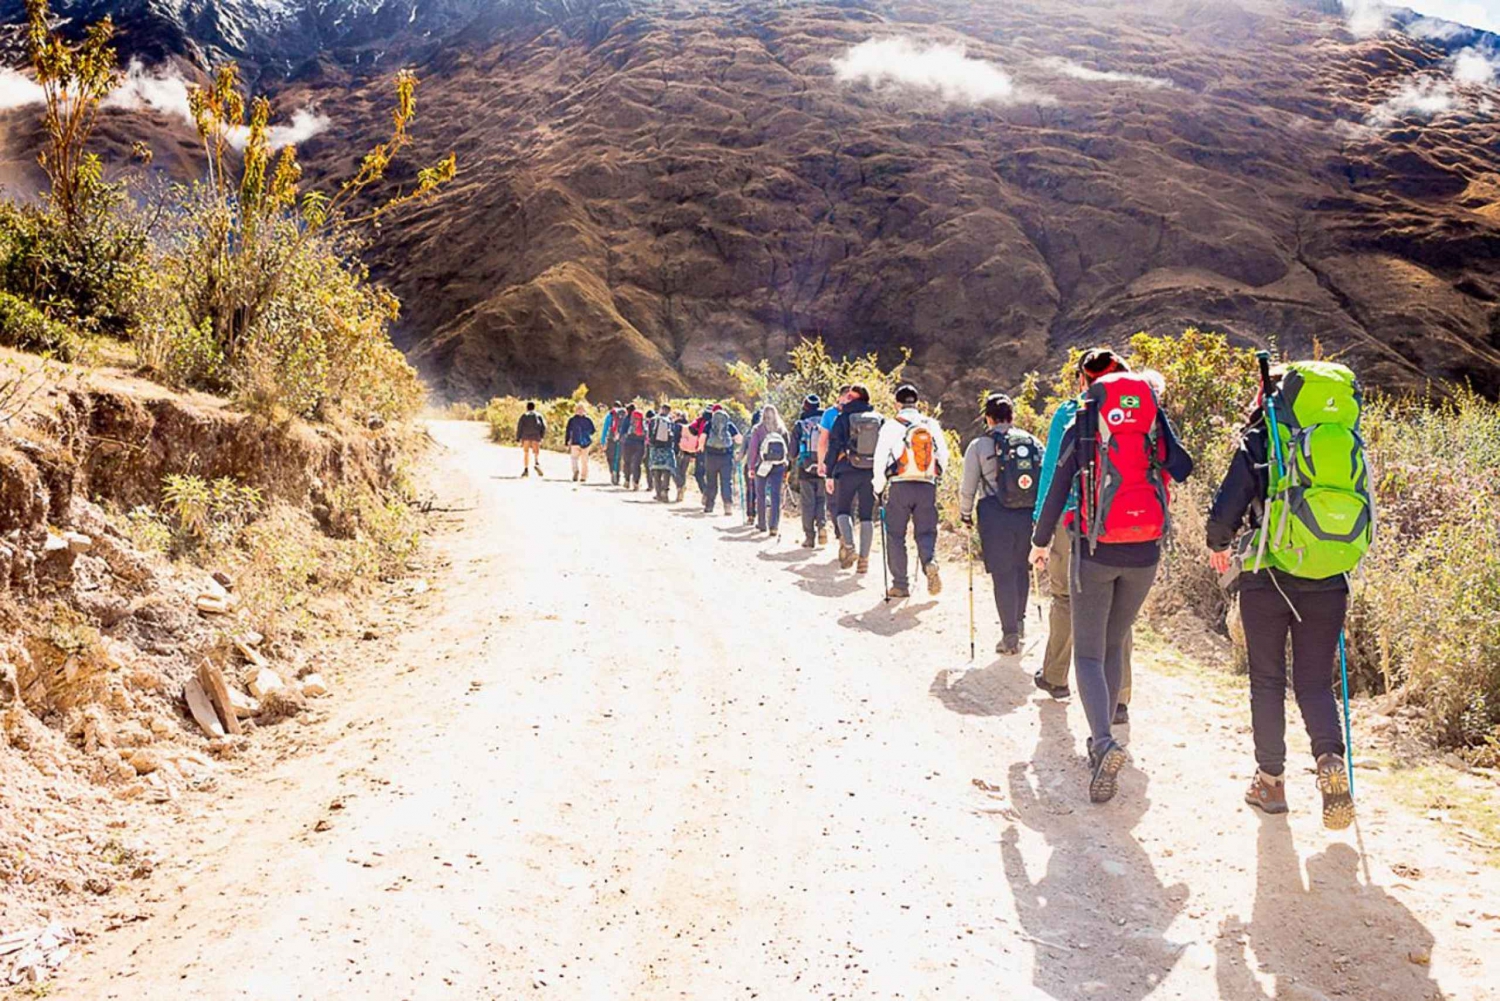 From Cusco: Budget Salkantay Trek with Return by Car